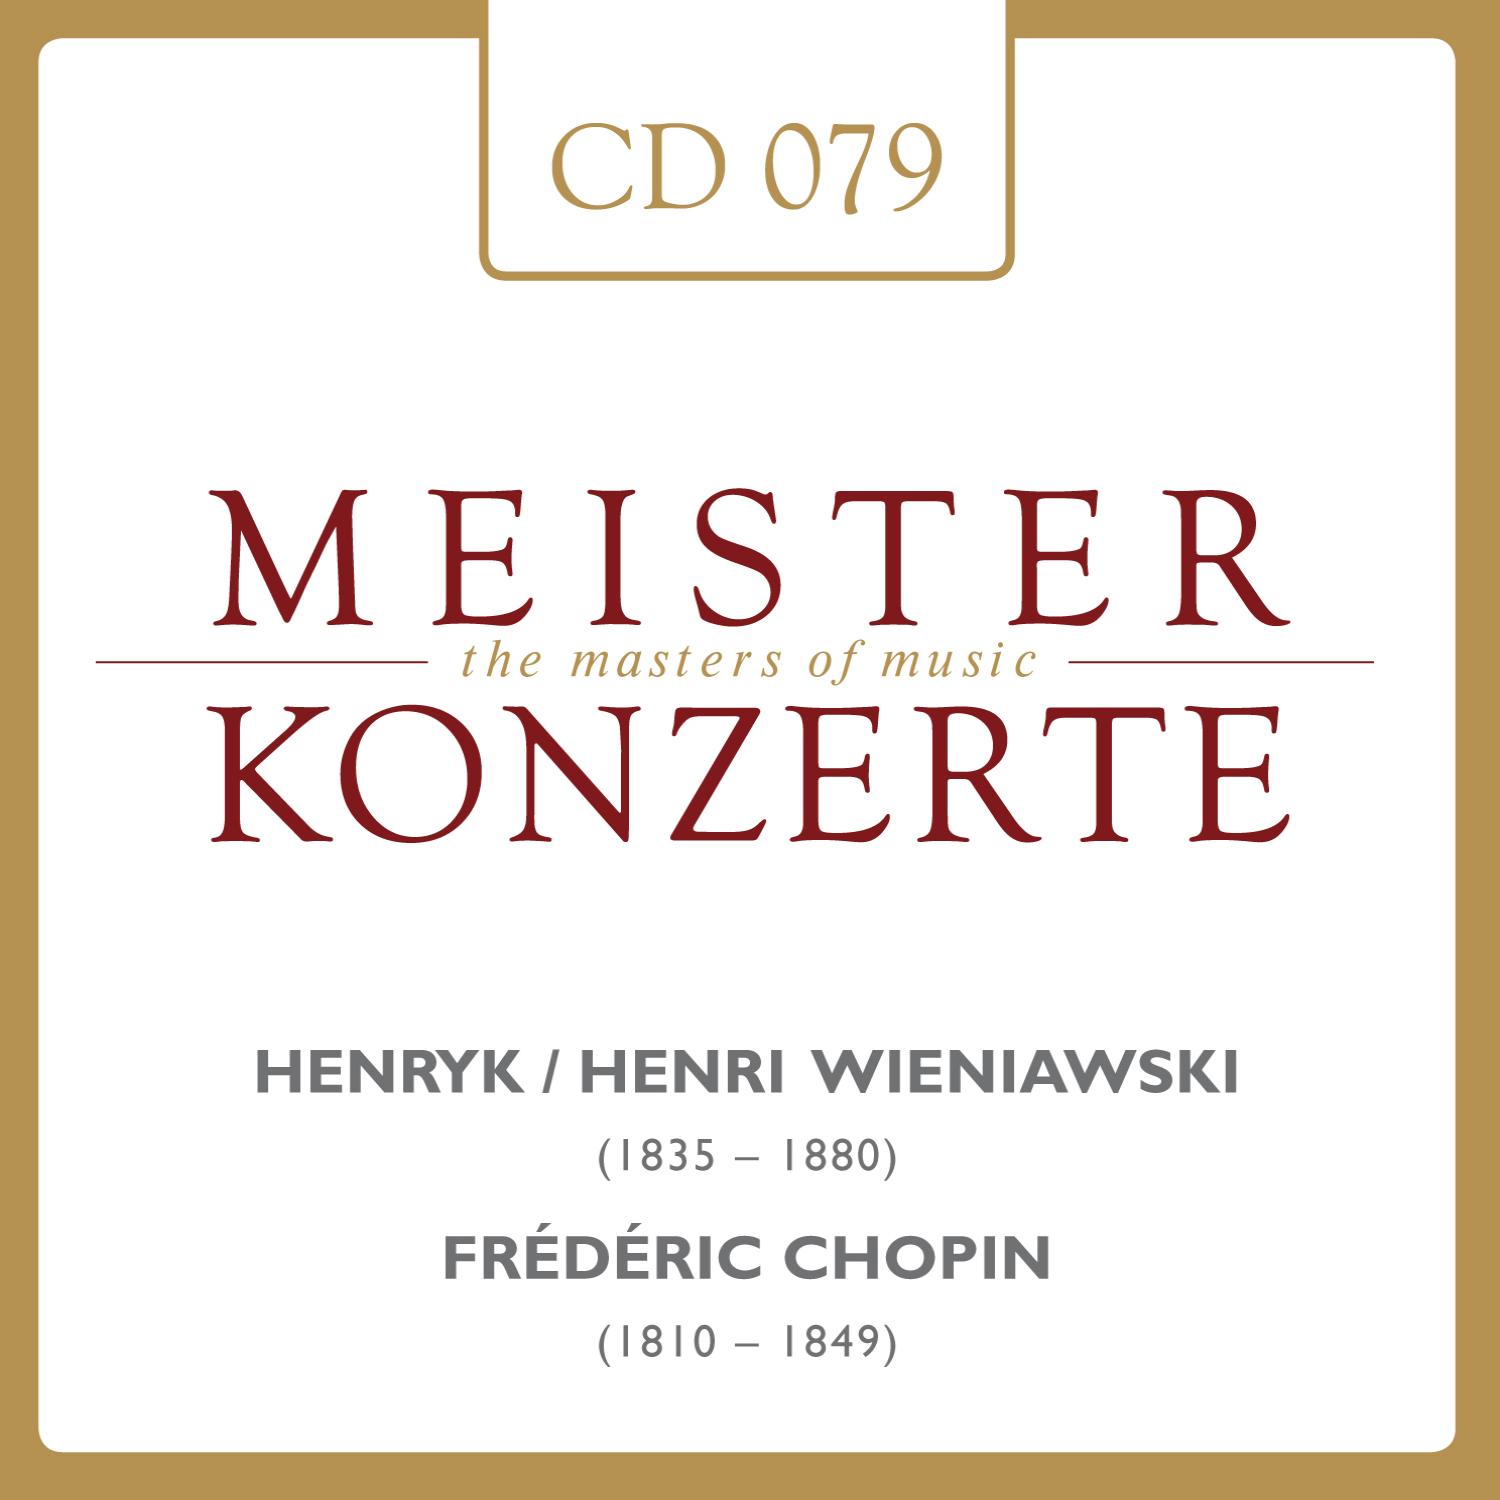 Henri Wieniawski  Fre de ric Chopin